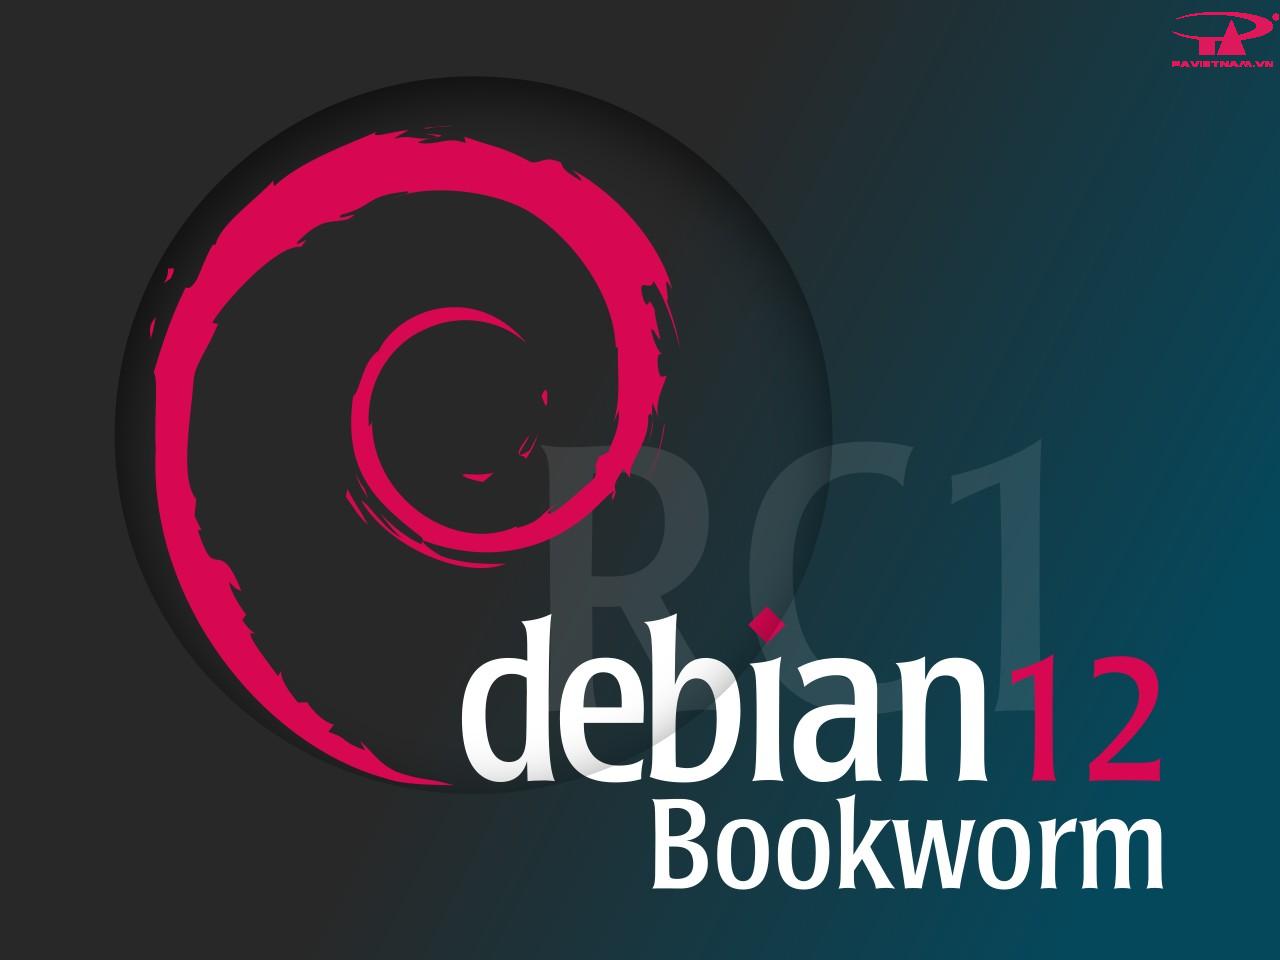 Debian 12.0 “Bookworm”